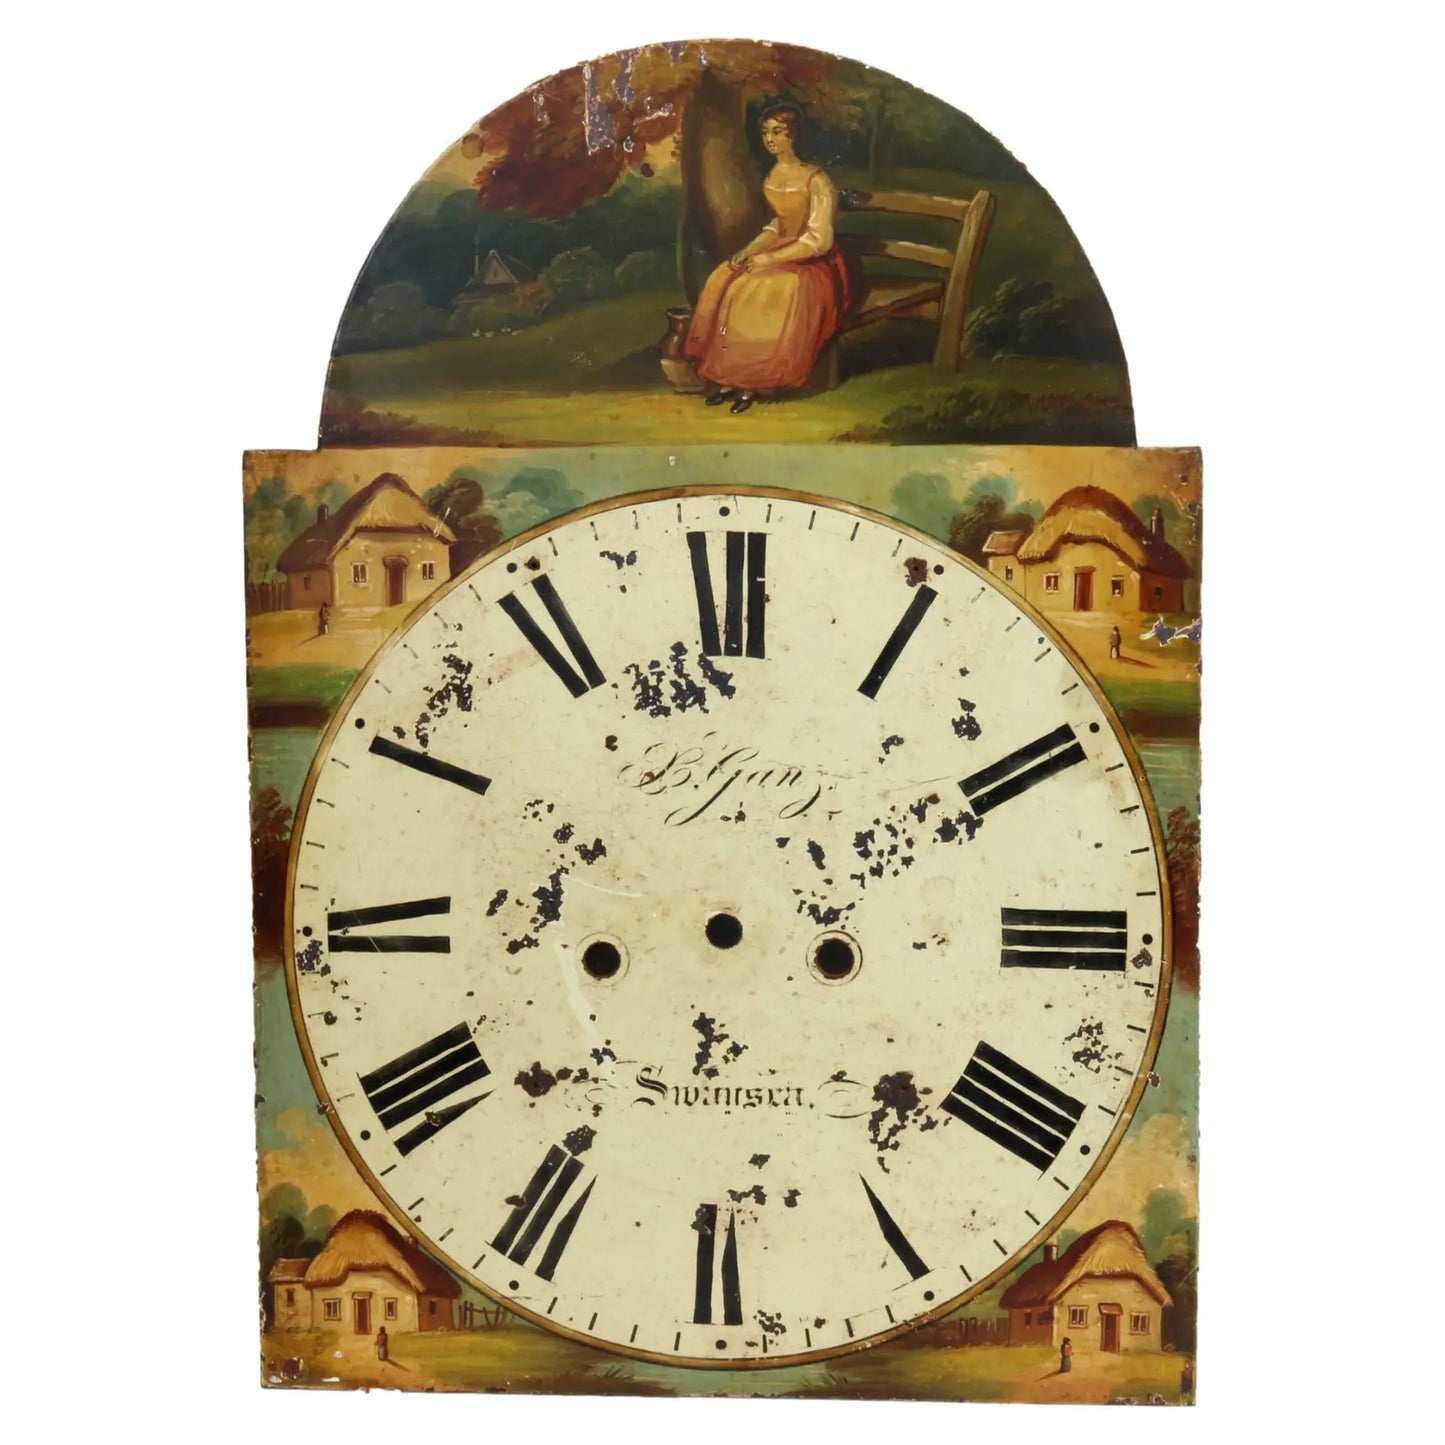 18th Century Hand-Painted Farm Scene Clock Face